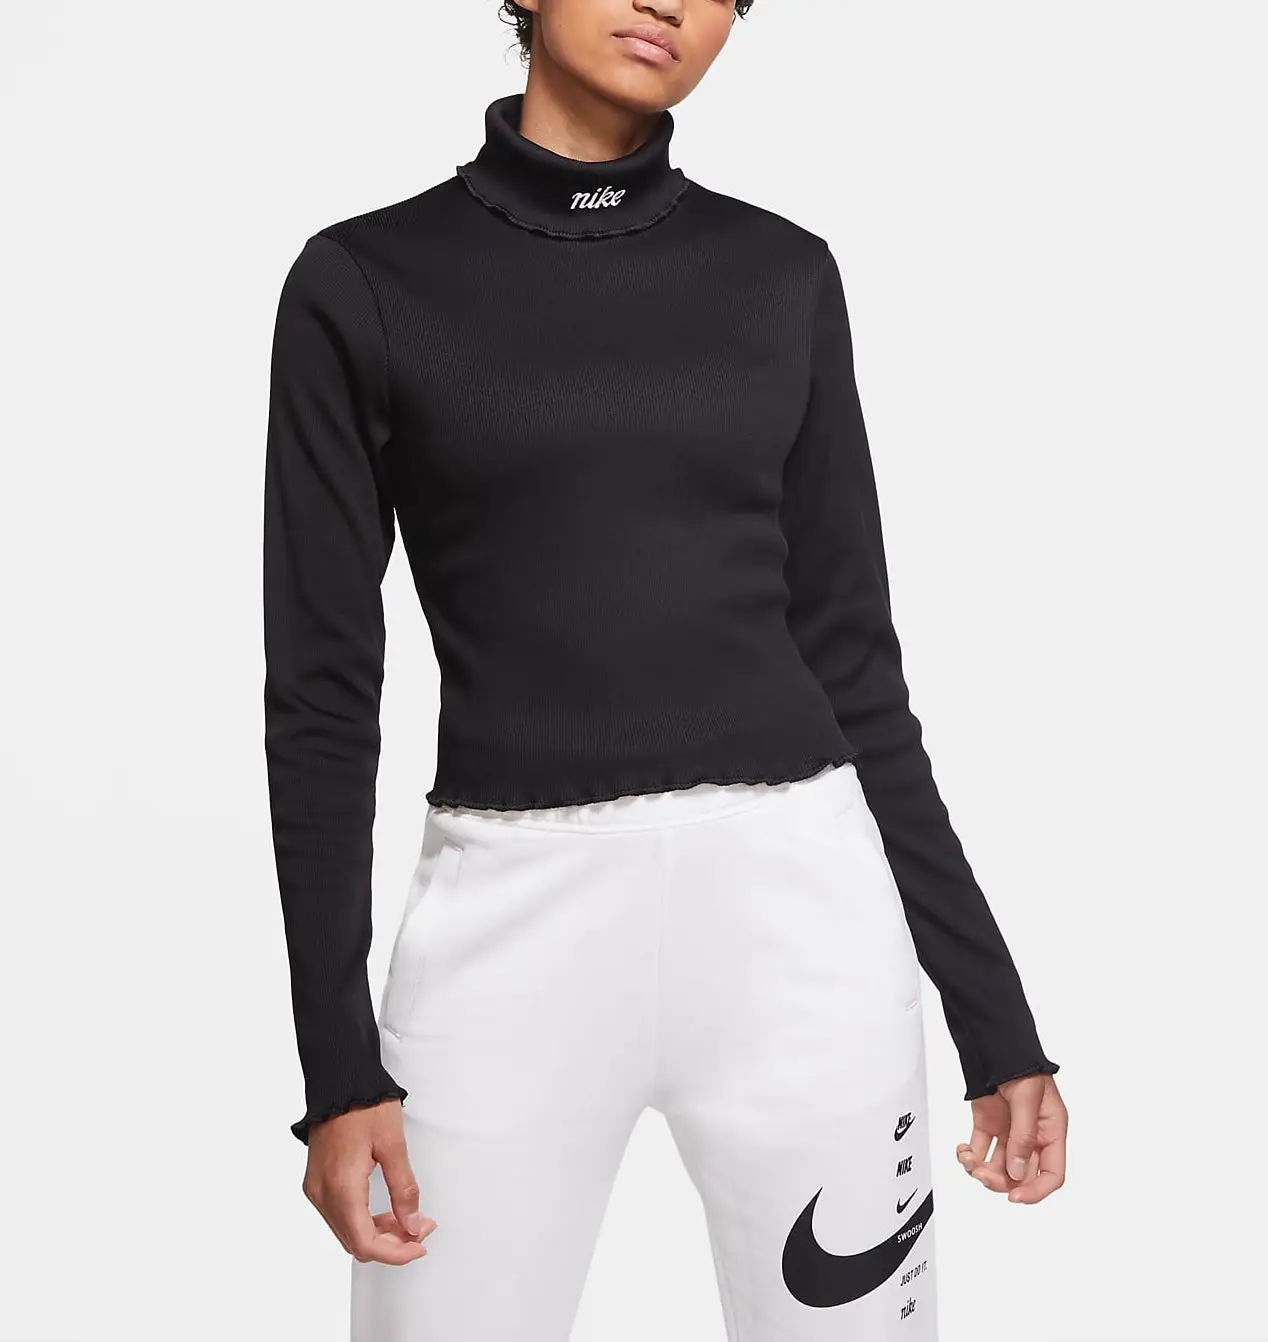 Nike Ribbed Long Sleeve Top Black